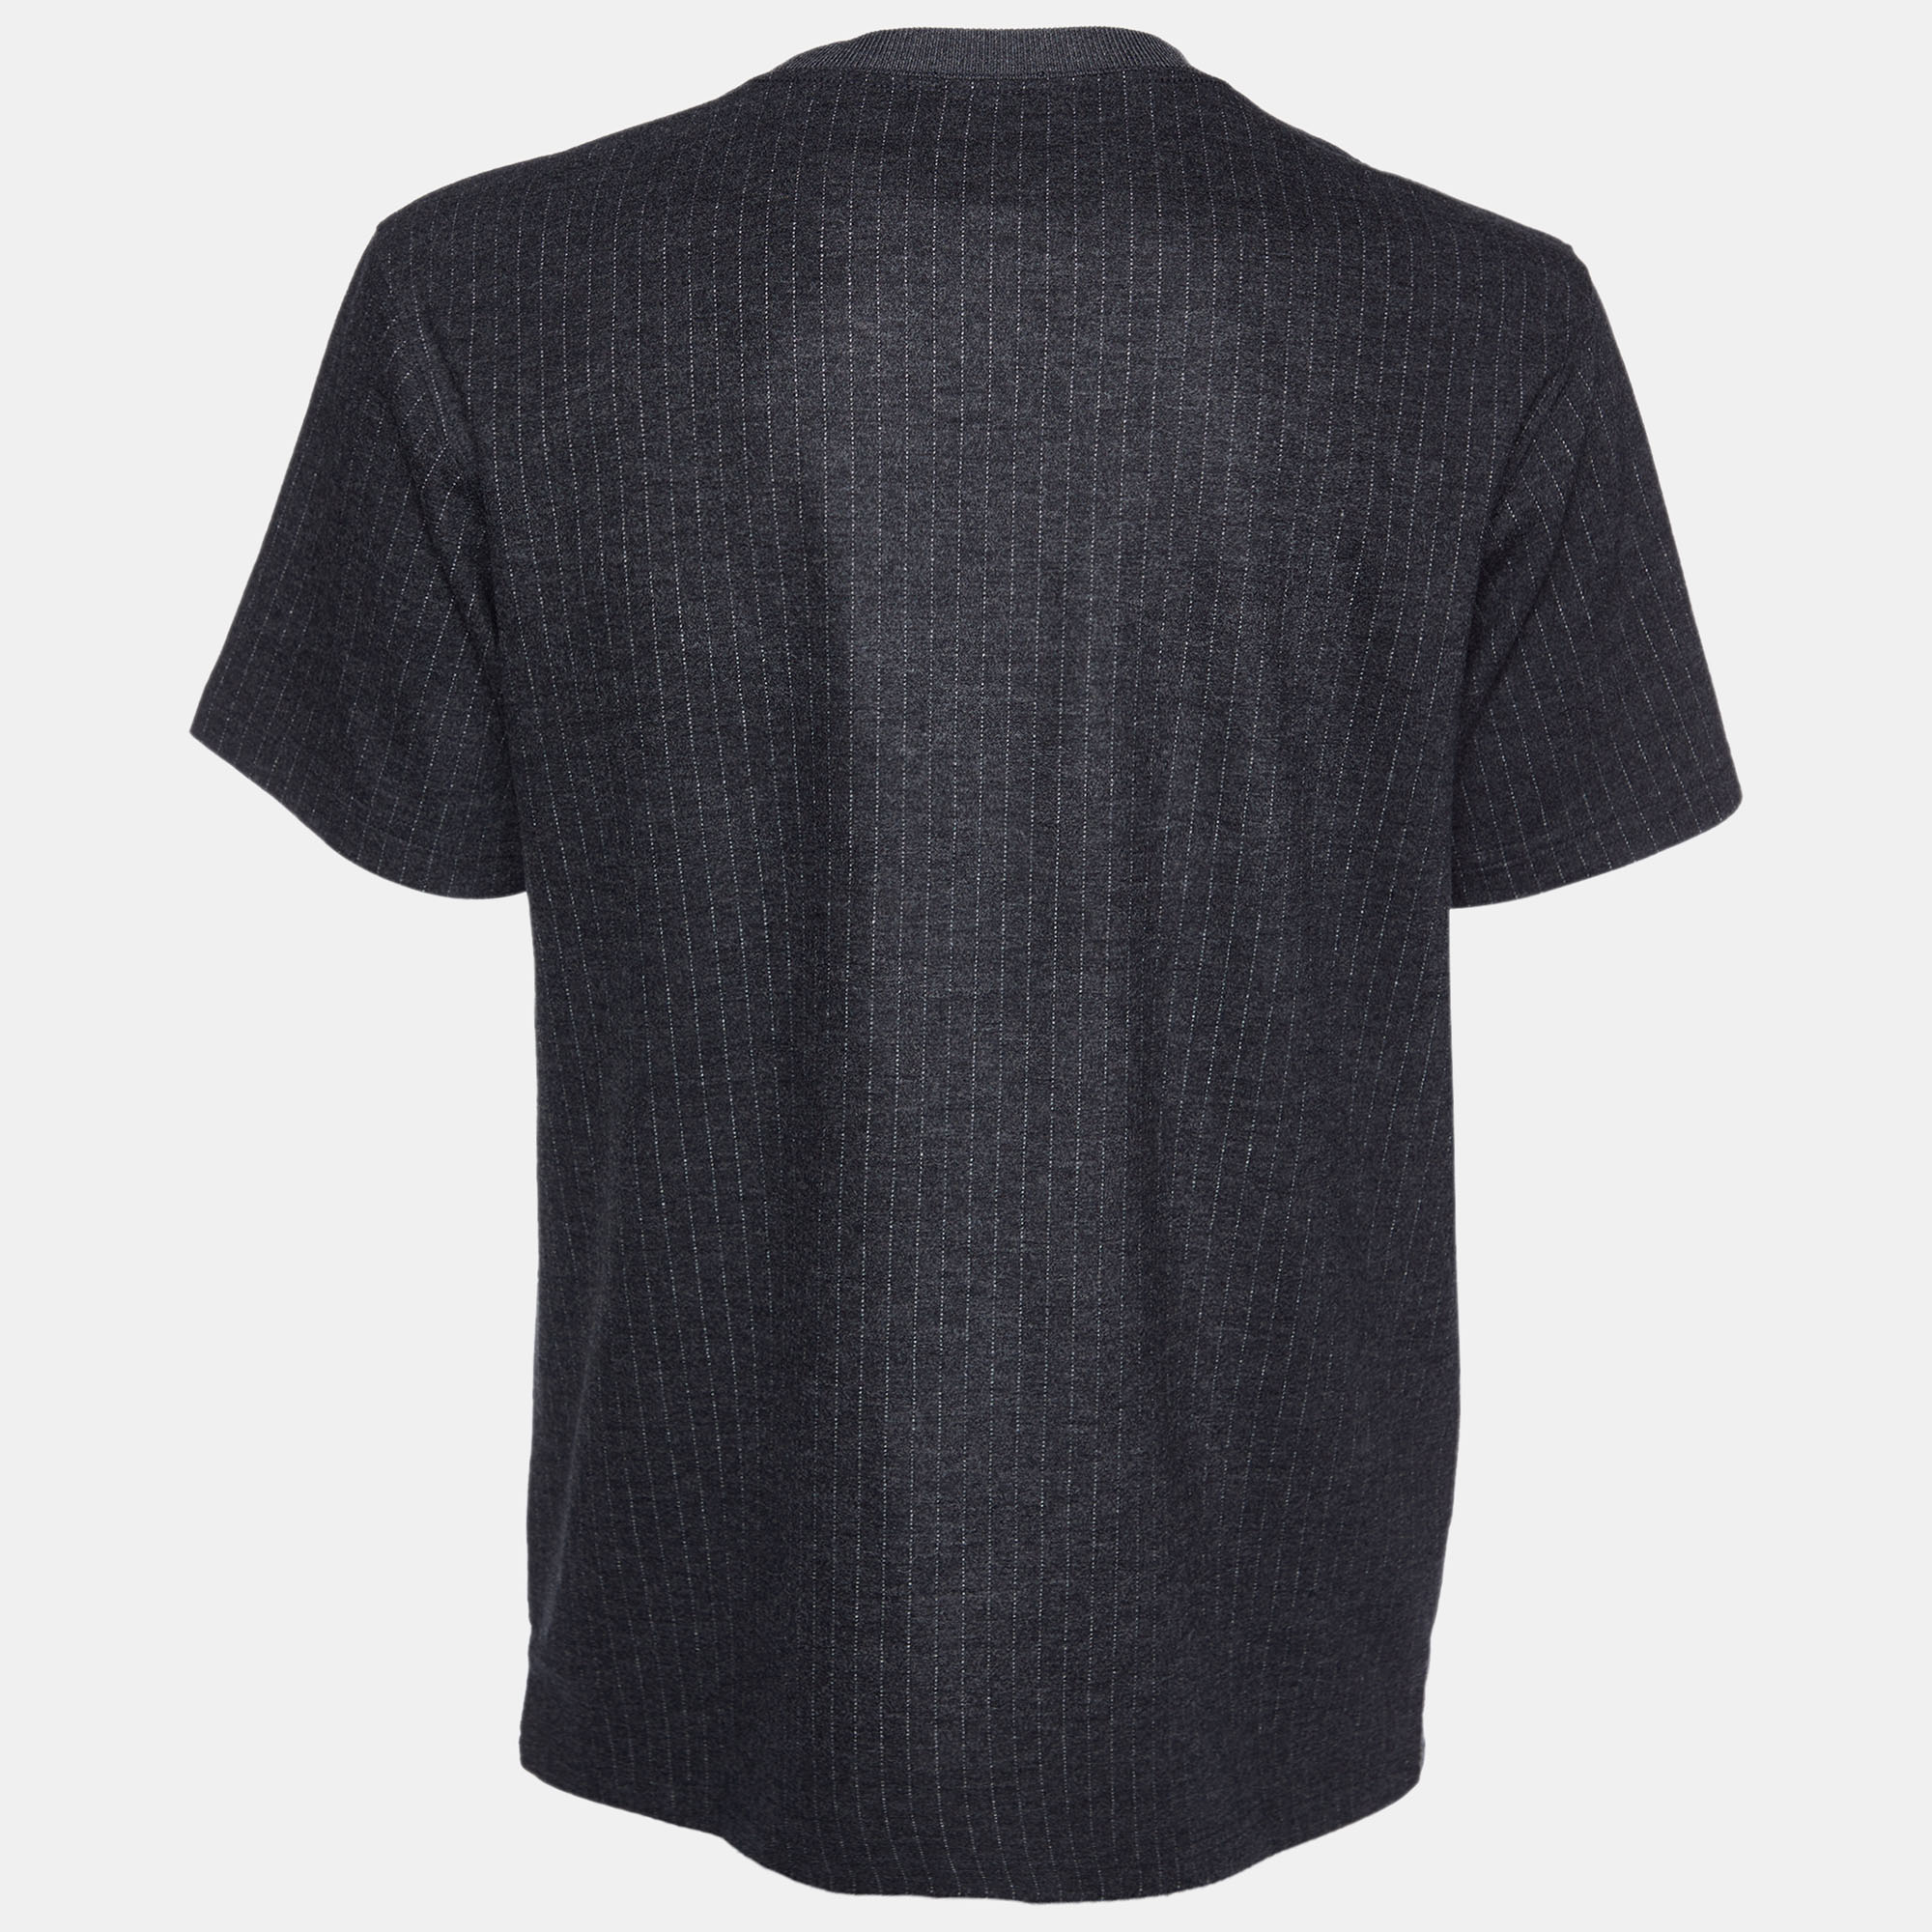 

Dior Homme Black Striped Wool & Cotton Atelier Pocket Detail T-Shirt